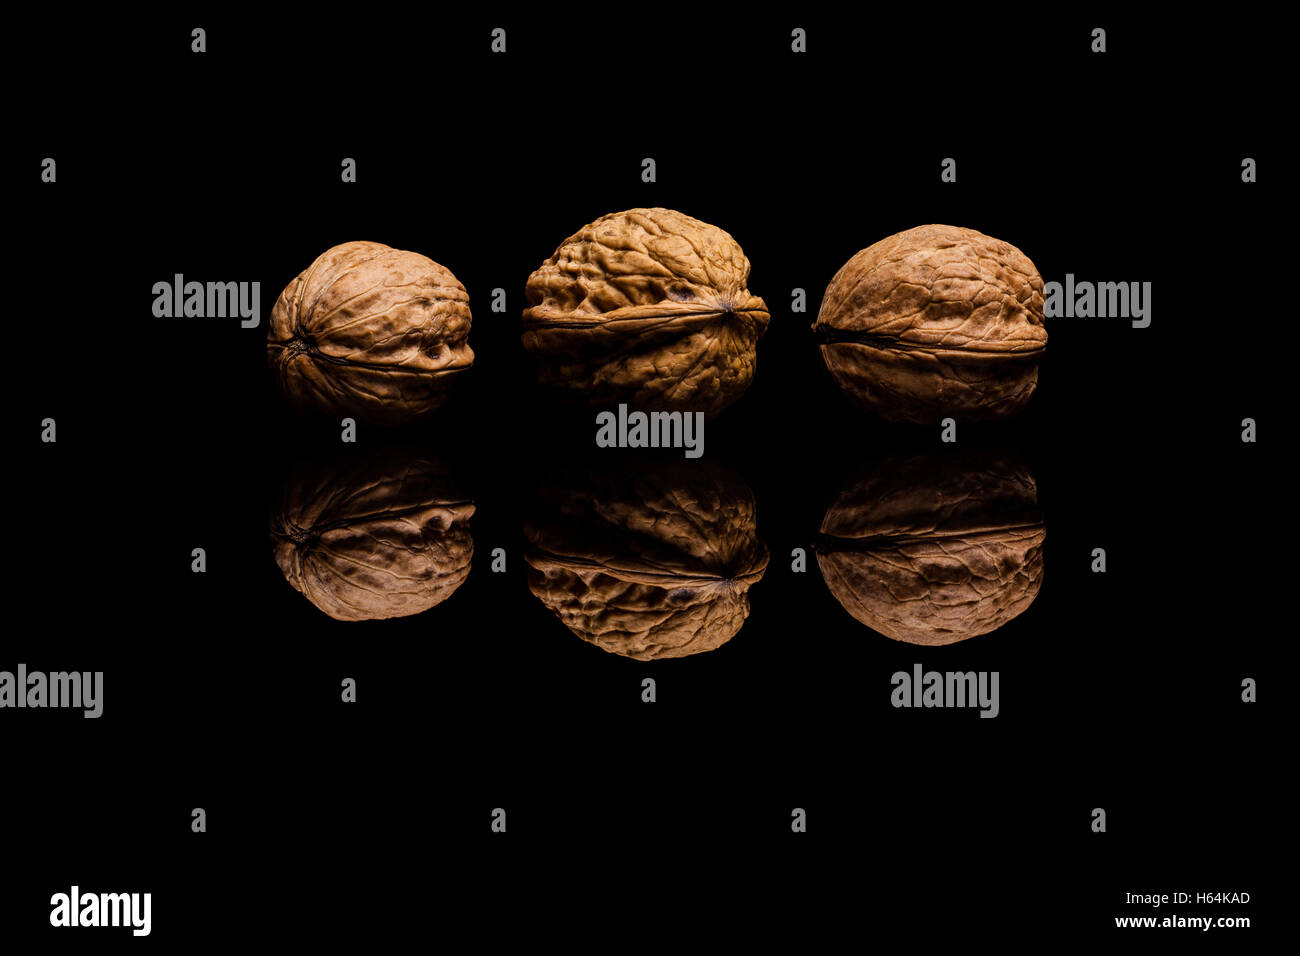 Three whole walnuts isolated on black reflective background Stock Photo